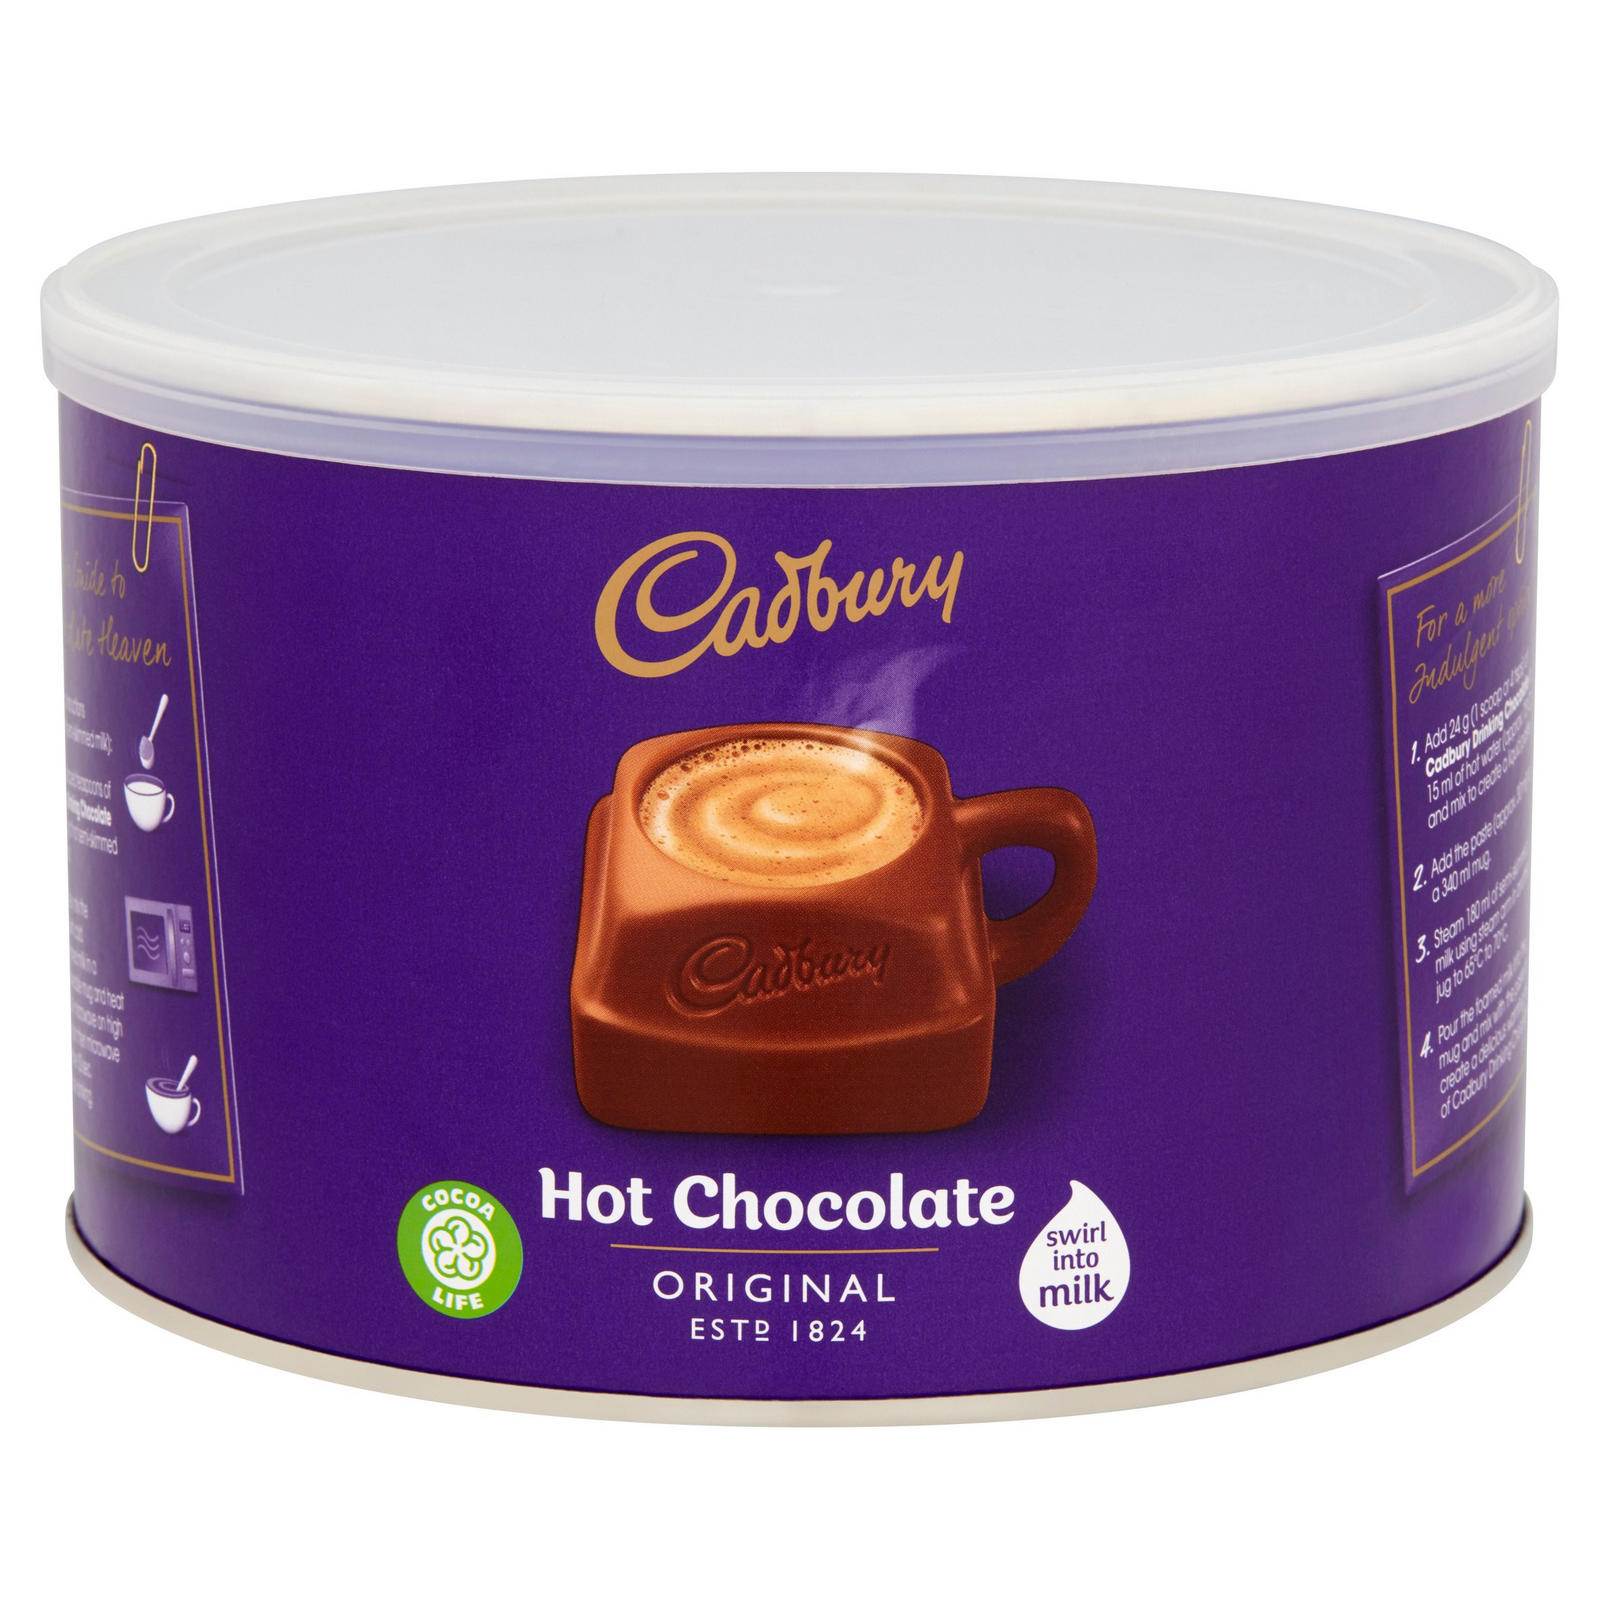 Cadbury's Hot Chocolate Powder 1kg